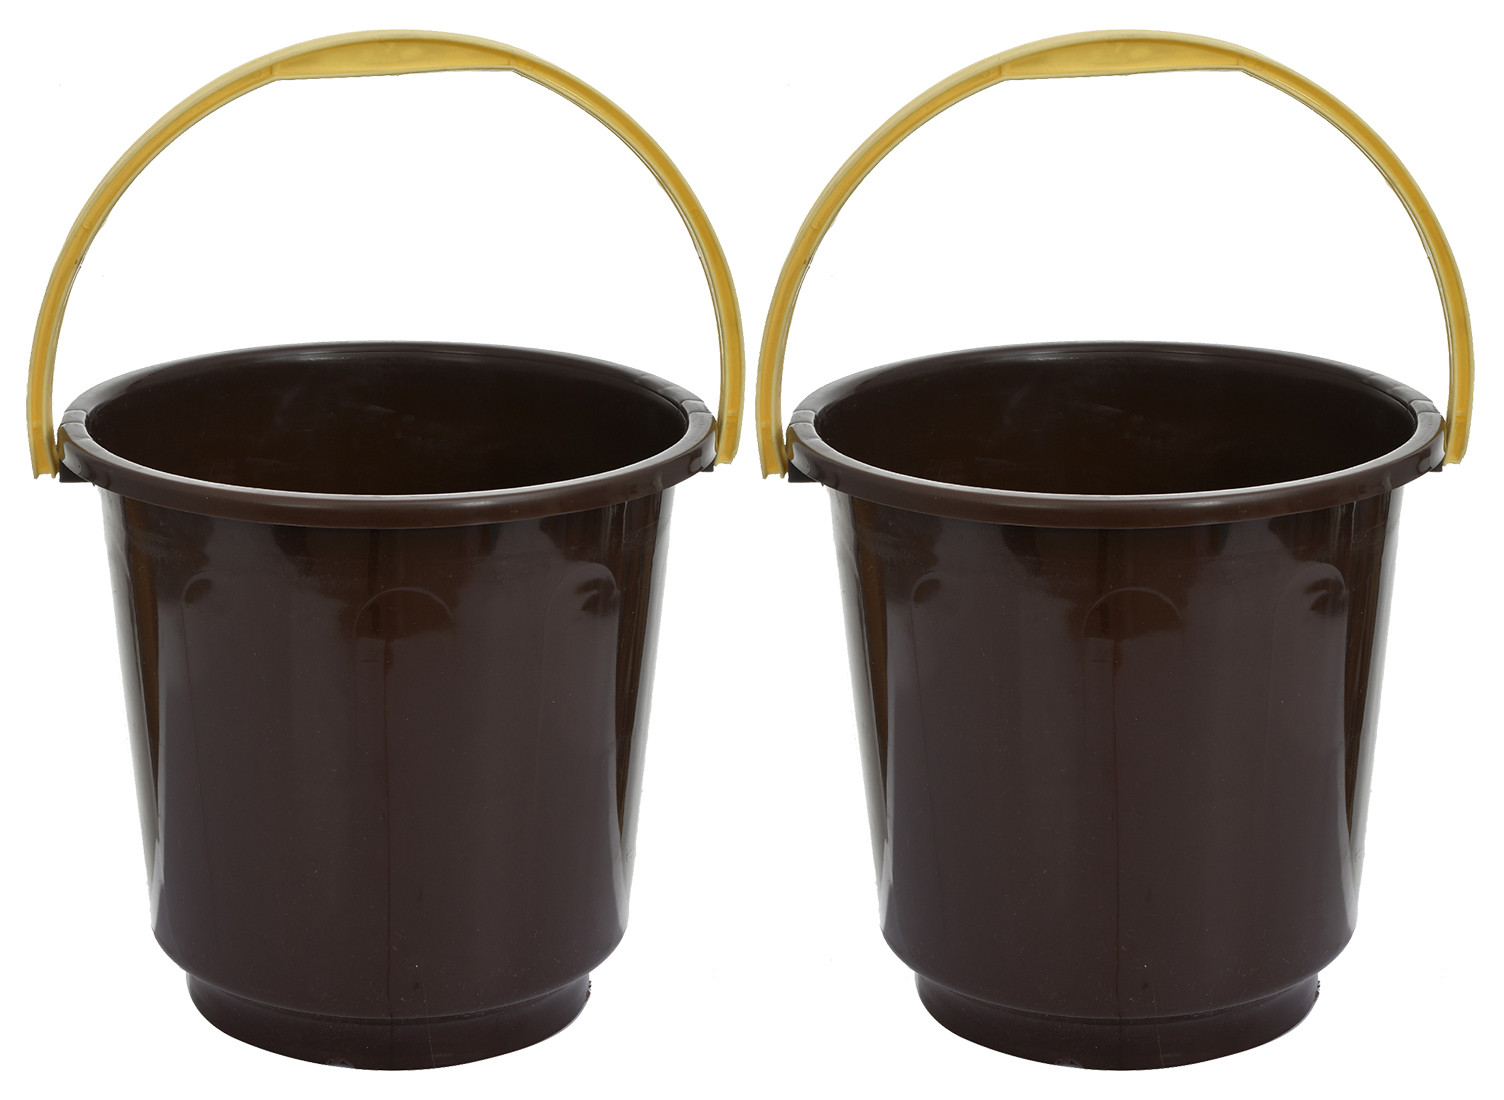 Kuber Industries Multipurposes Plastic Bucket For Bathing Home Cleaning & Storage Purpose, 16Ltr. (Brown)-47KM01205